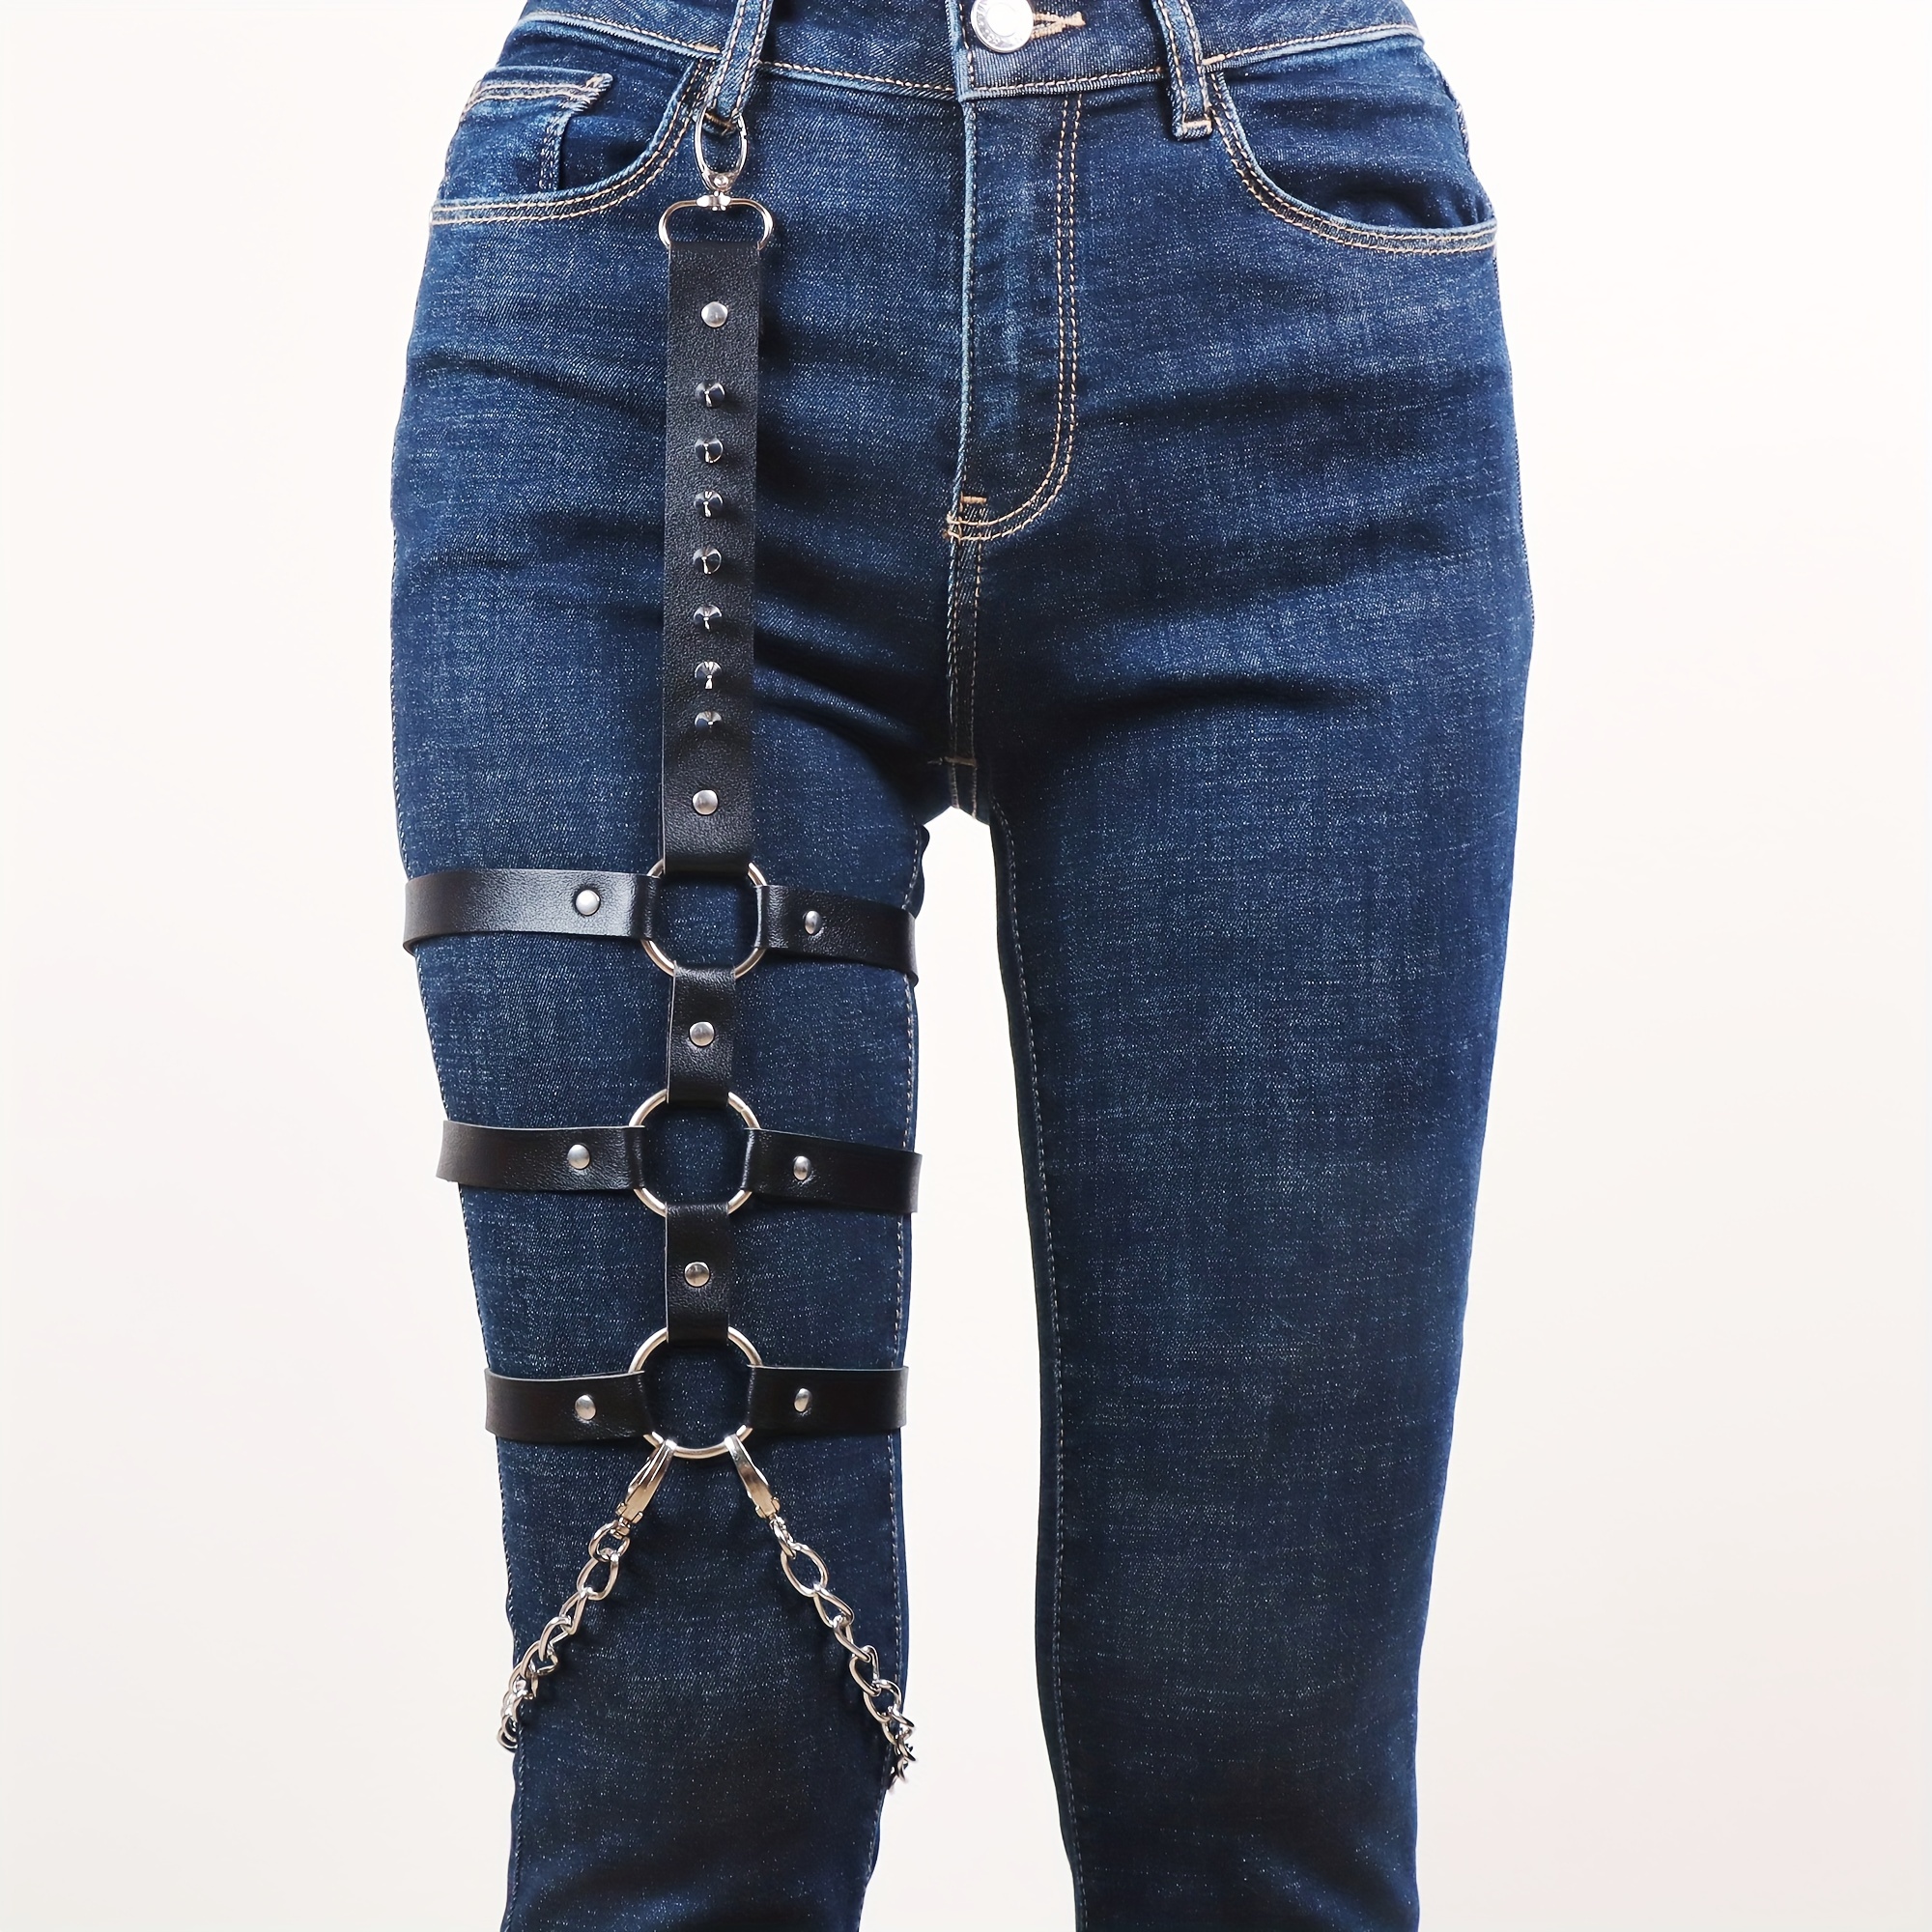 Black Pu Leather Wrapped Garter Belt Adjustable Body Chain Jewelry